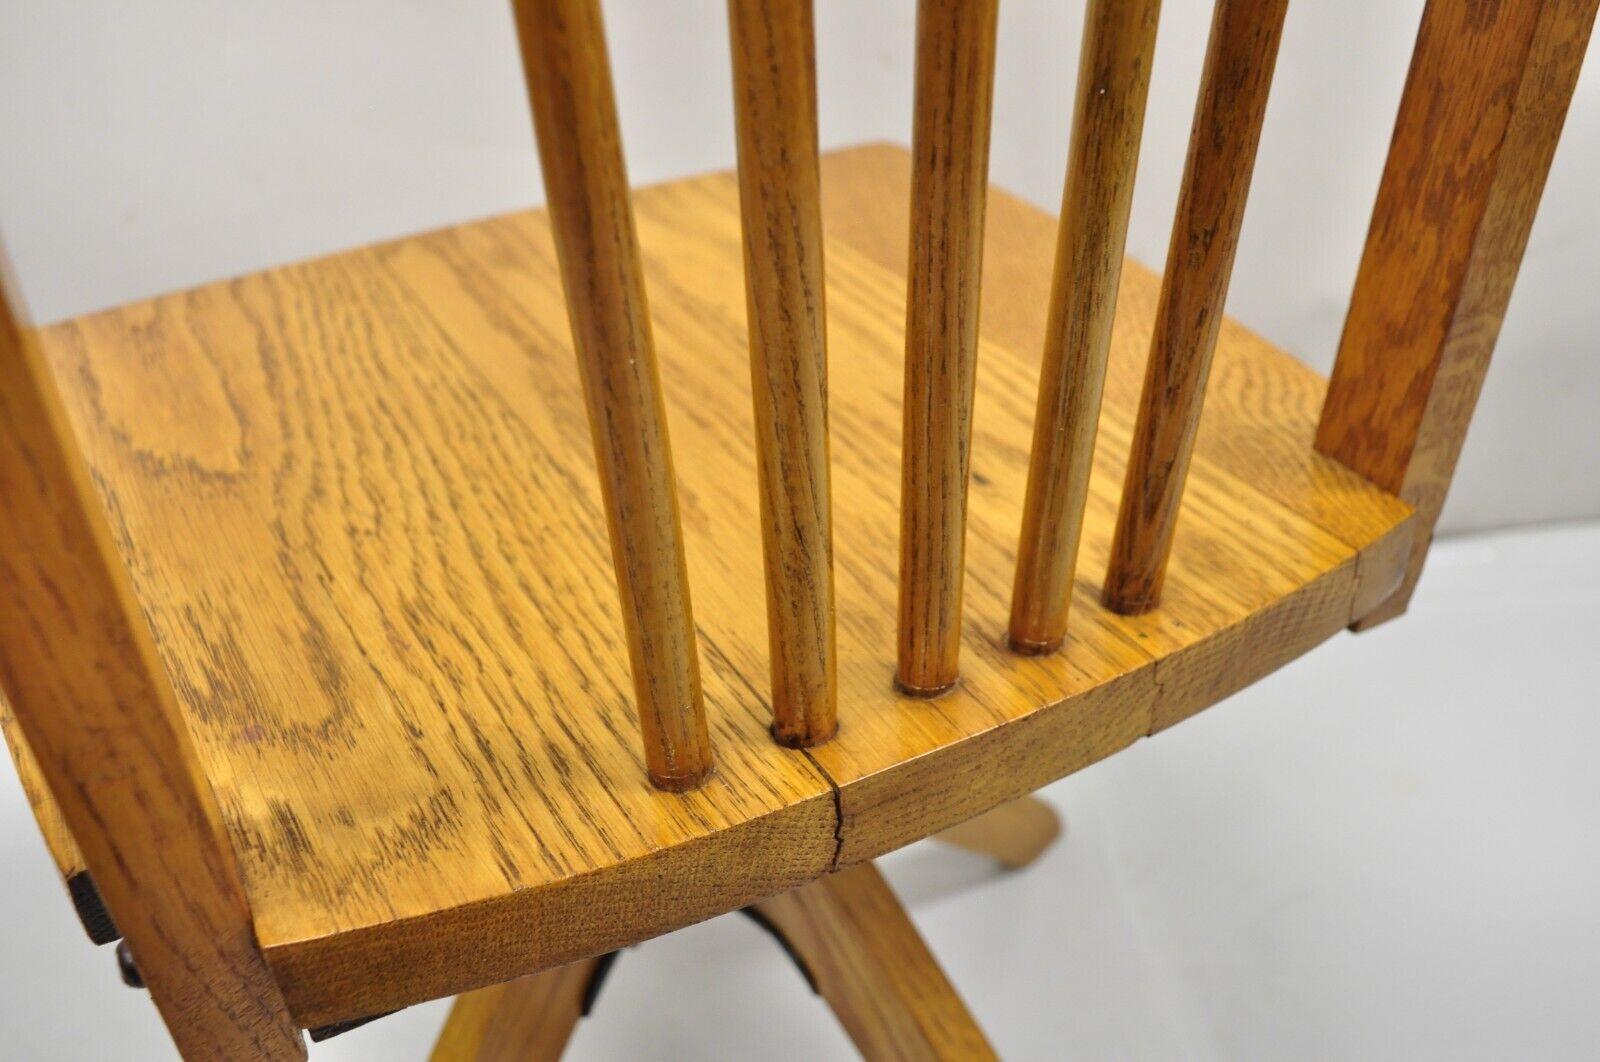 Vintage Mission Arts & Crafts Oak Wood Child’s School Desk Chair For Sale 1